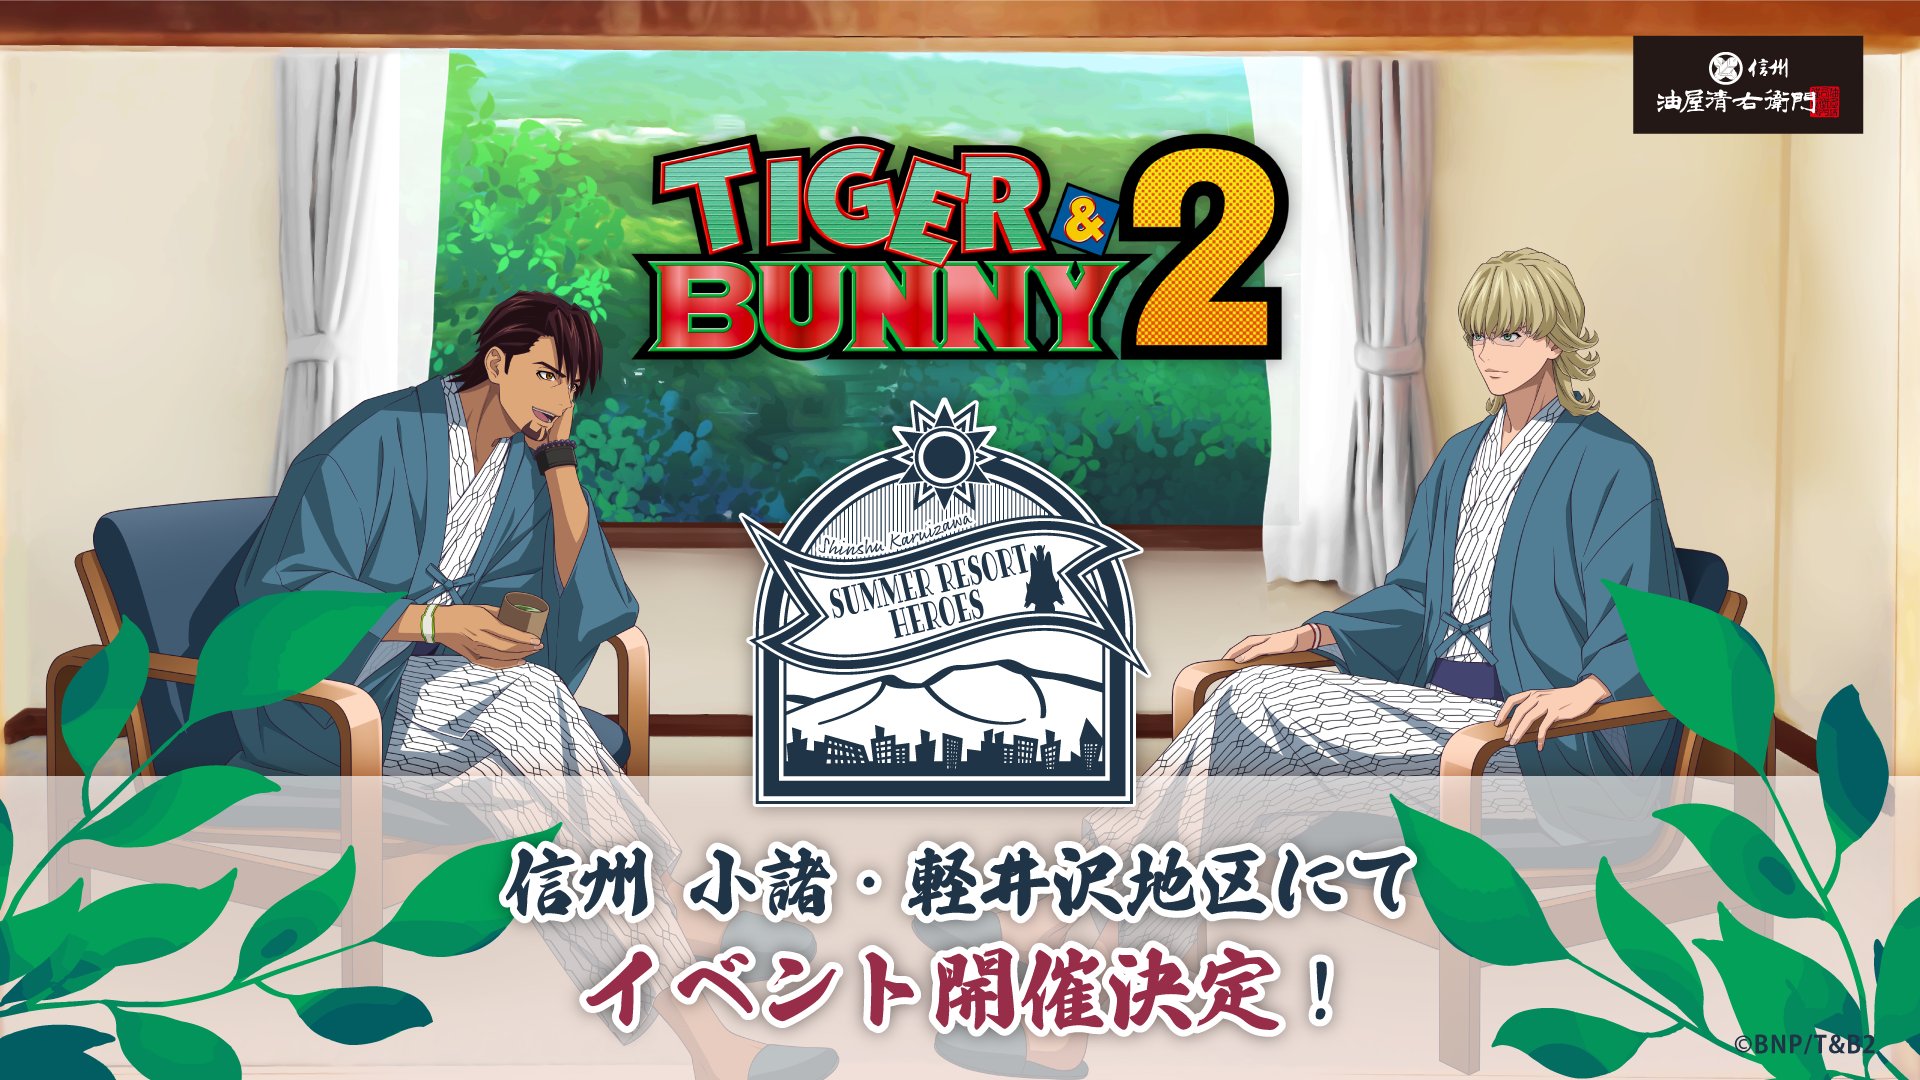 TIGER & BUNNY2 × 長野県 小諸・軽井沢 8月25日より温泉イベント開催!